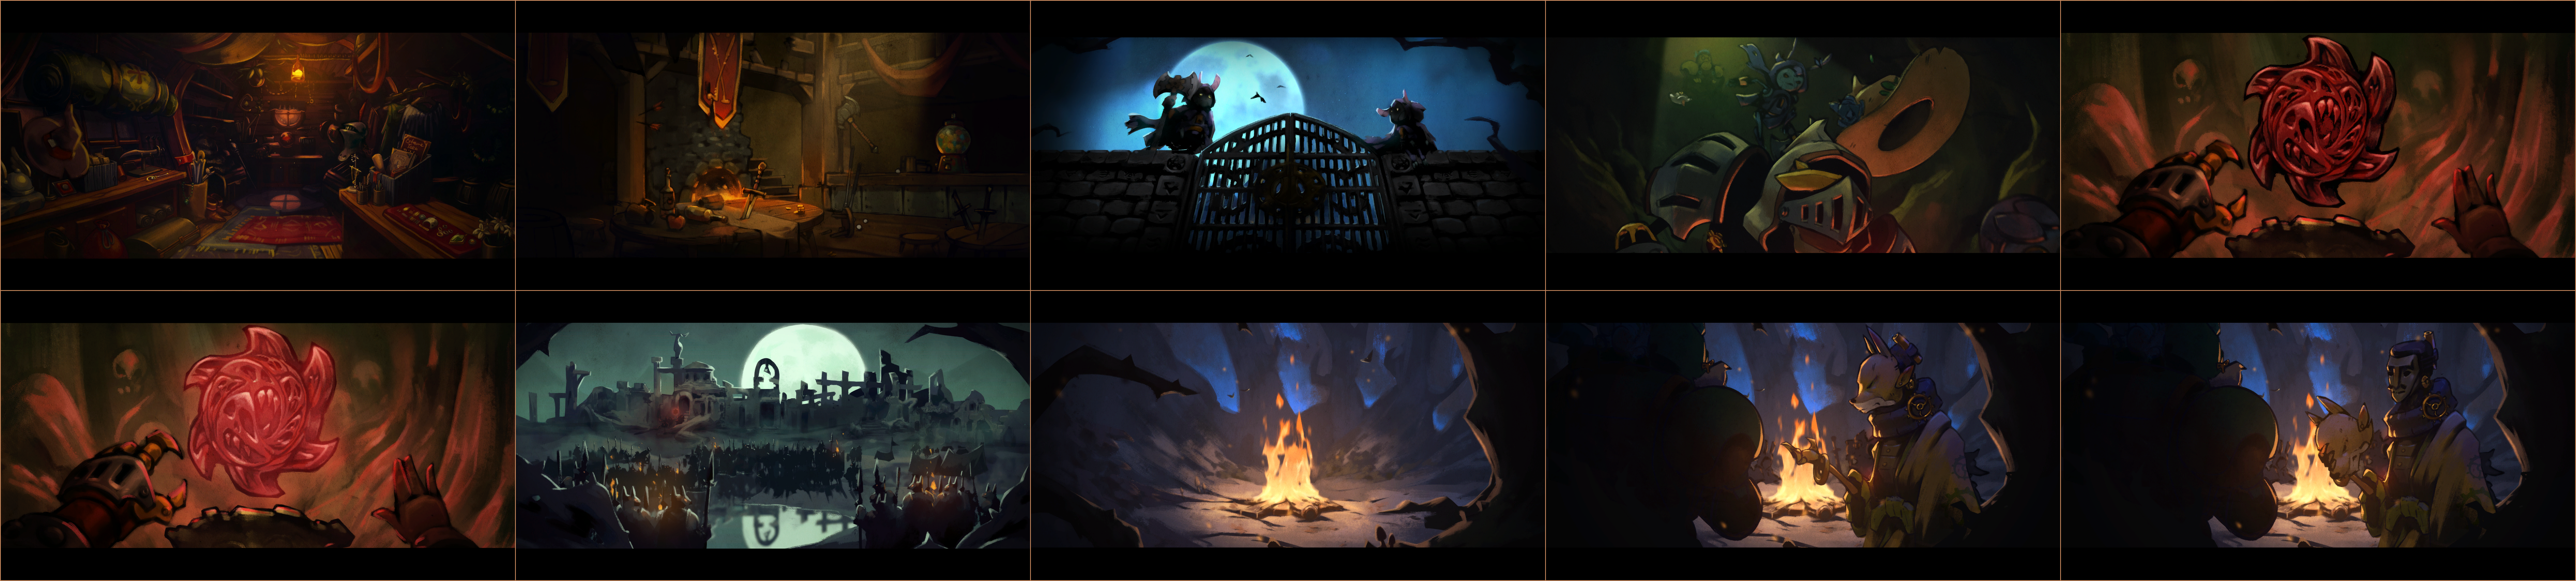 SteamWorld Quest - Cutscene Backgrounds